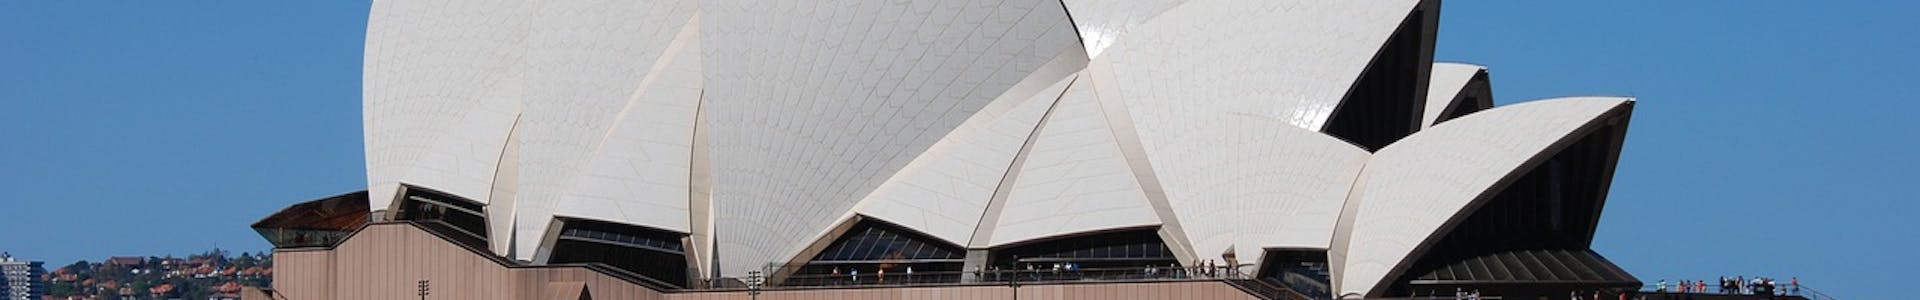 Sydney Opera House UK/Australia Trade Agreement